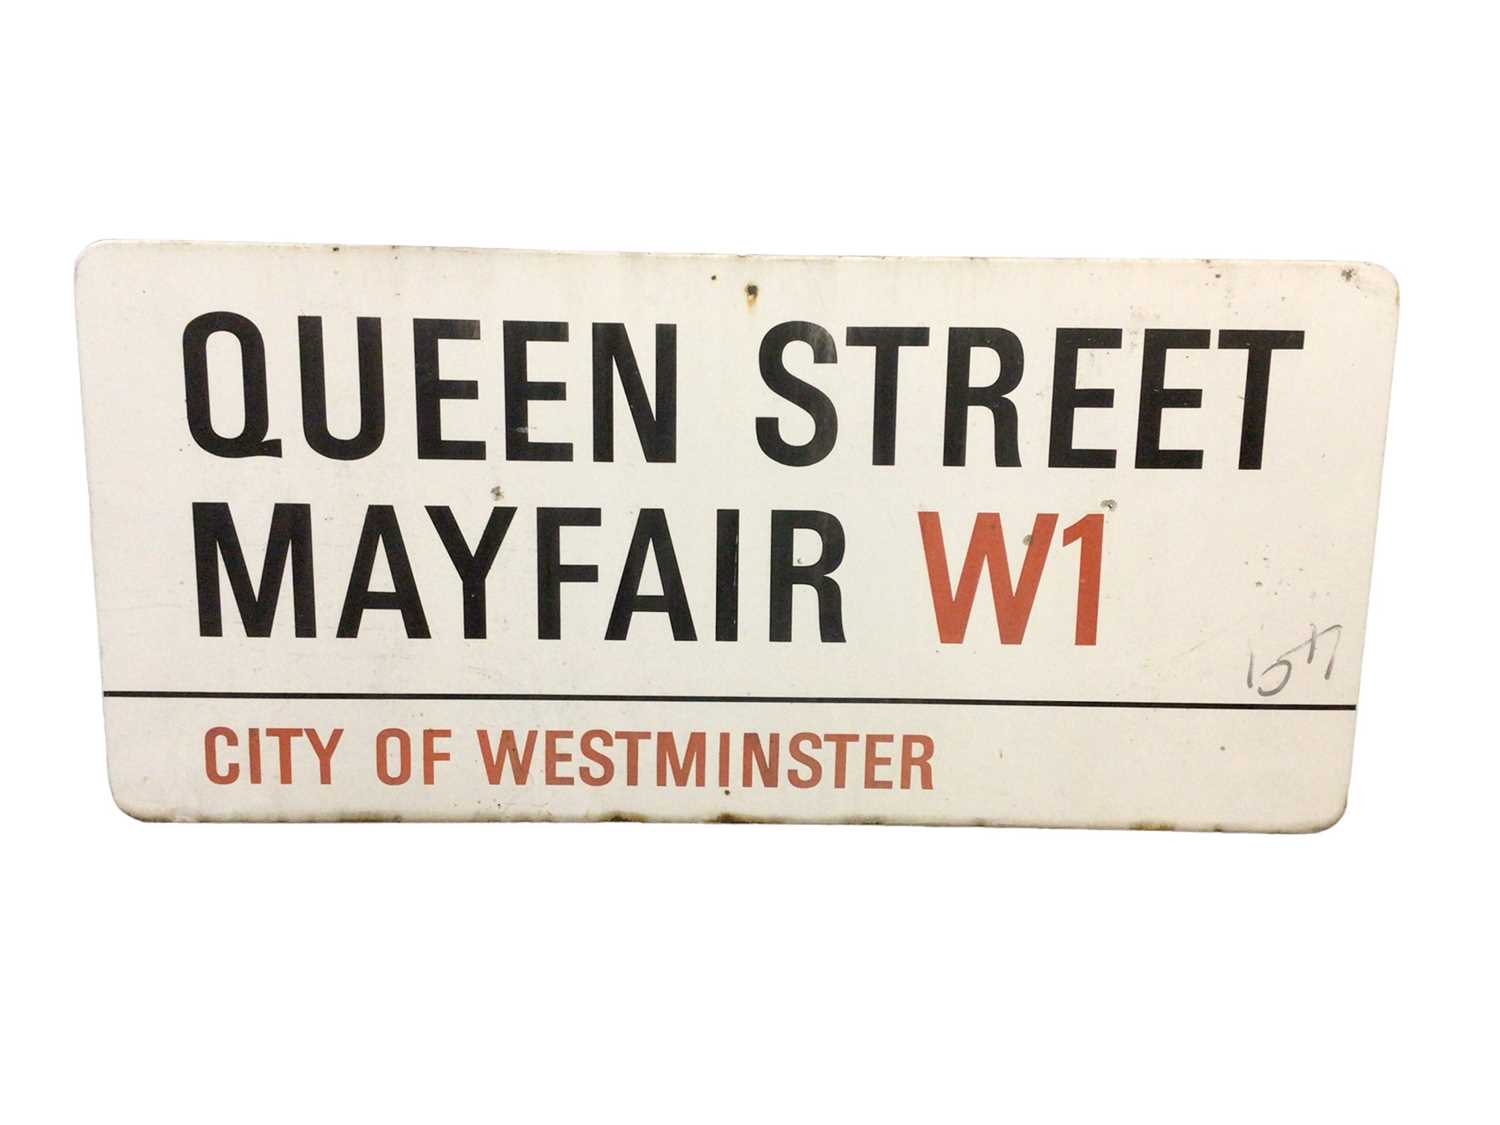 Lot 2 - Original Queen Street Mayfair W1 City of Westminster enamel street sign